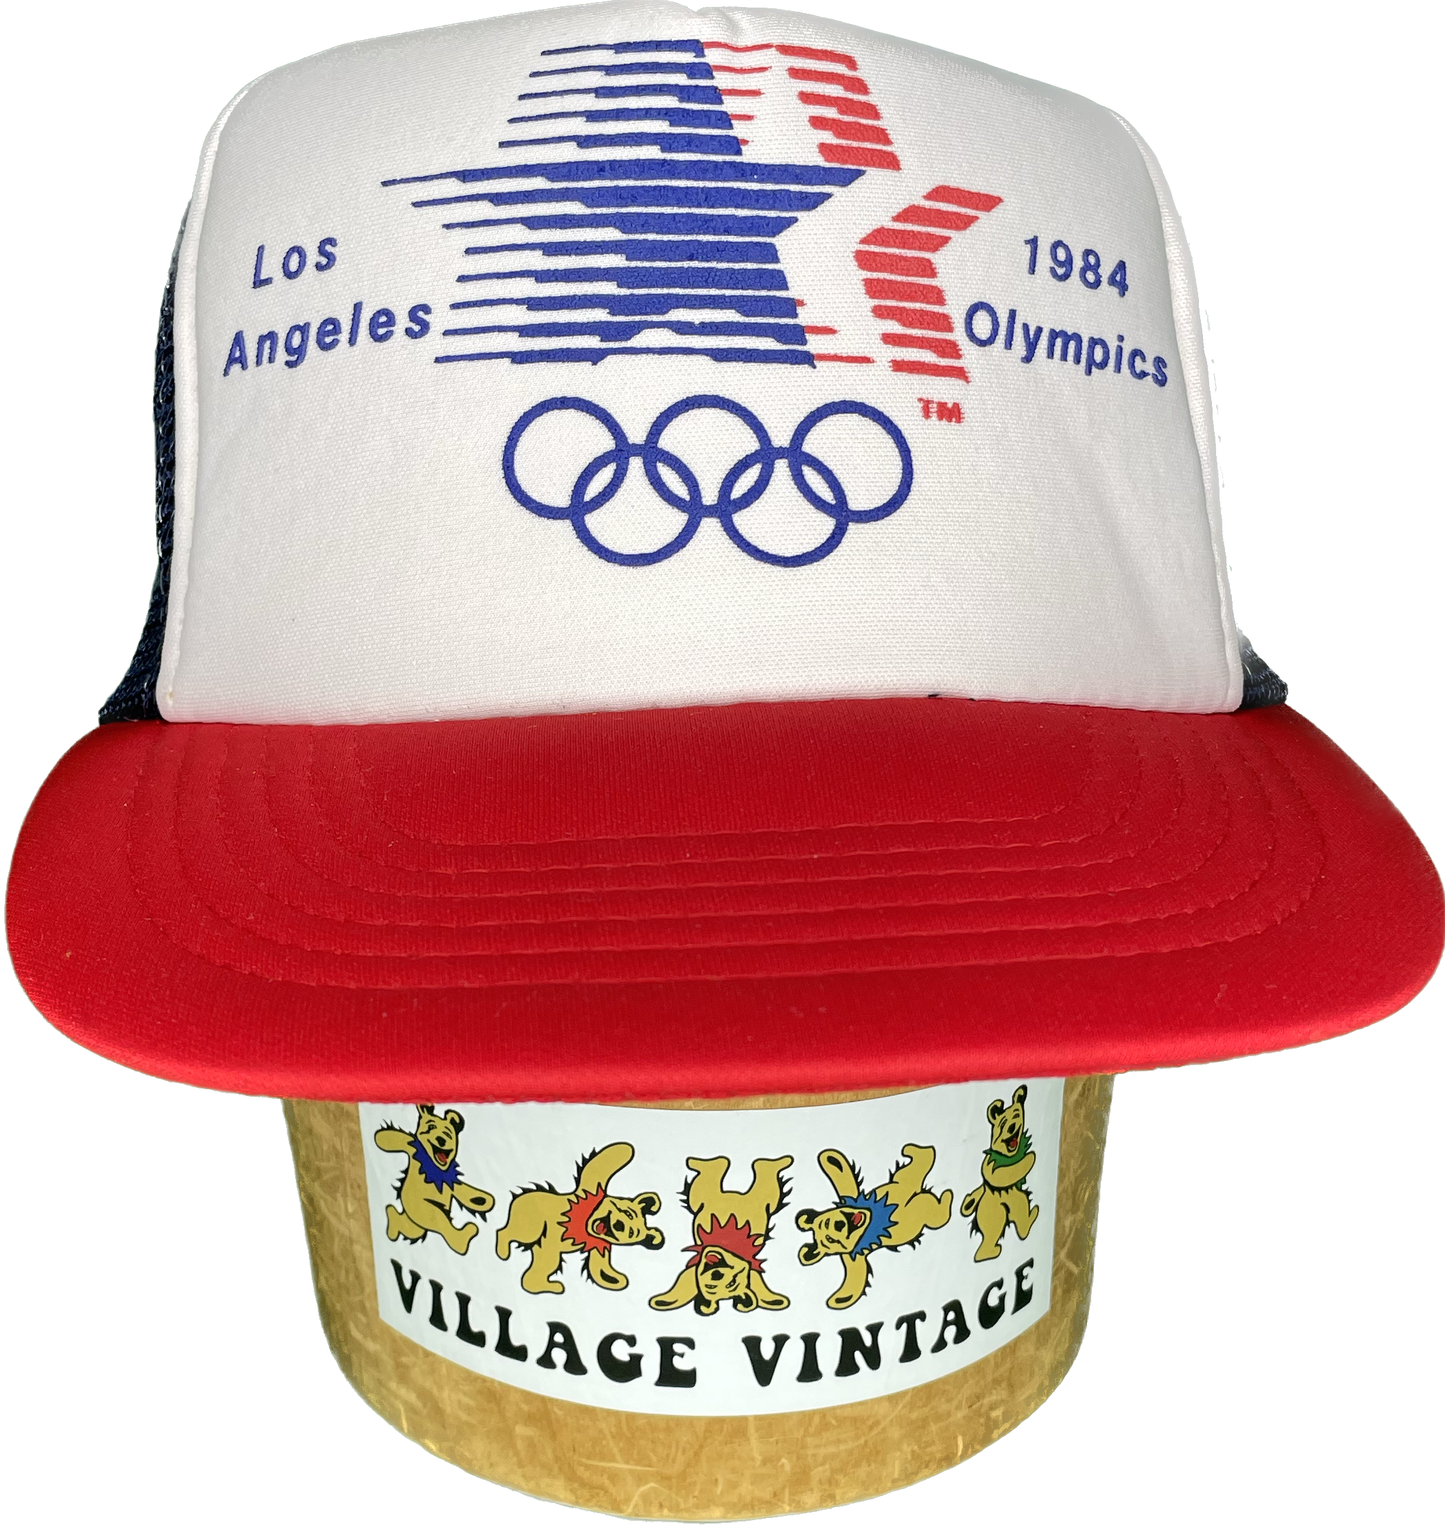 Vintage 80s Los Angeles Olympics 1984 SnapBack Trucker Hat